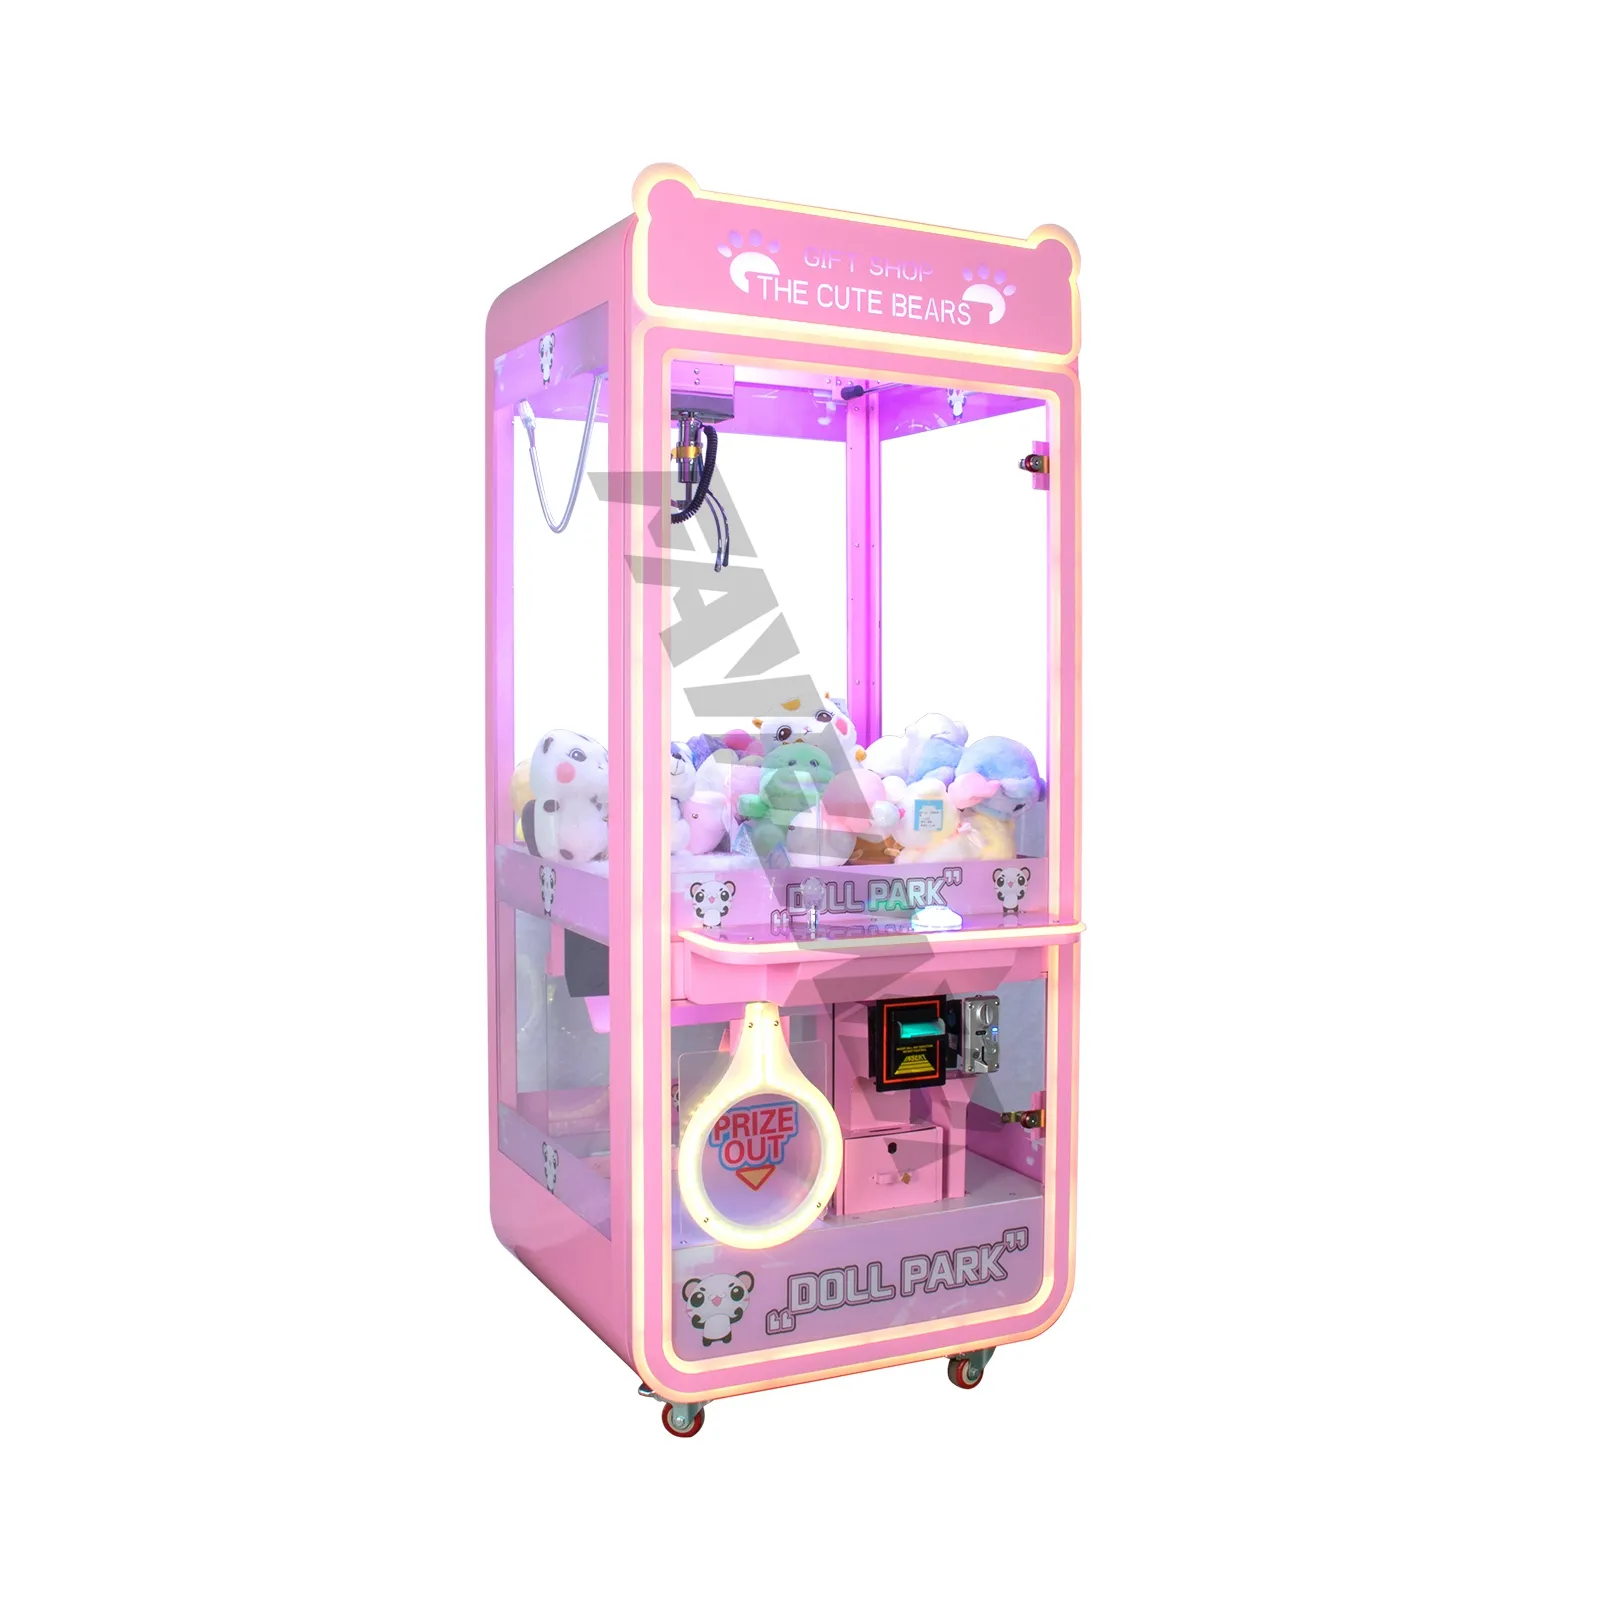 Diskon mesin cakar derek besar Arcade anak-anak murah kustom Jepang komersial